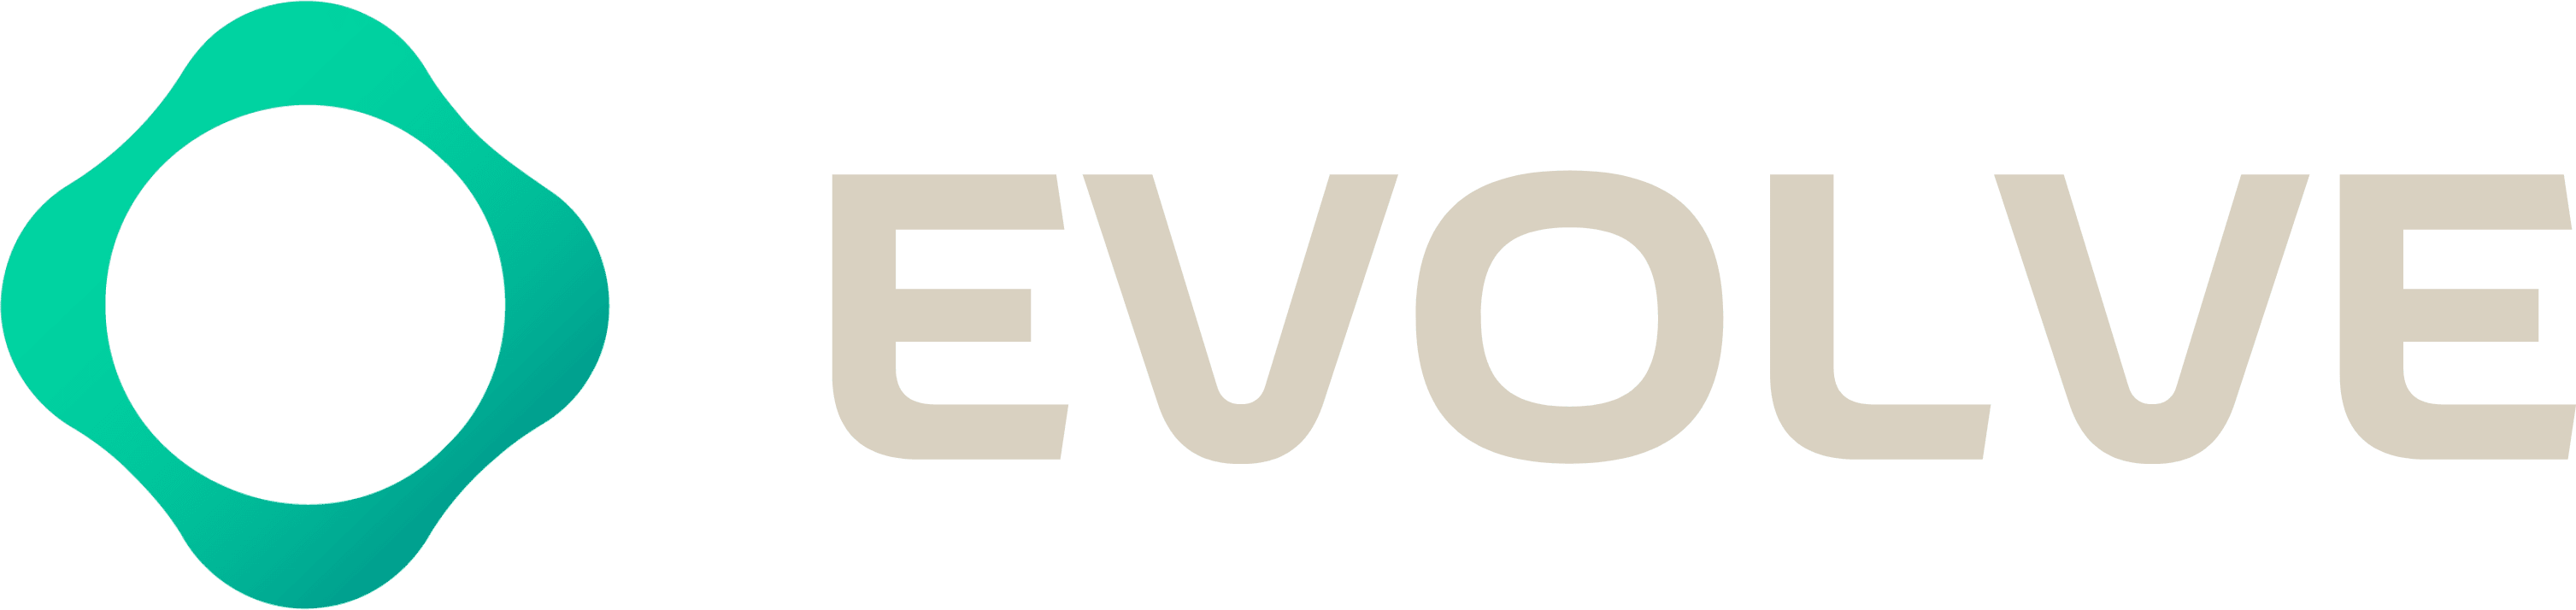 evolve-logo2